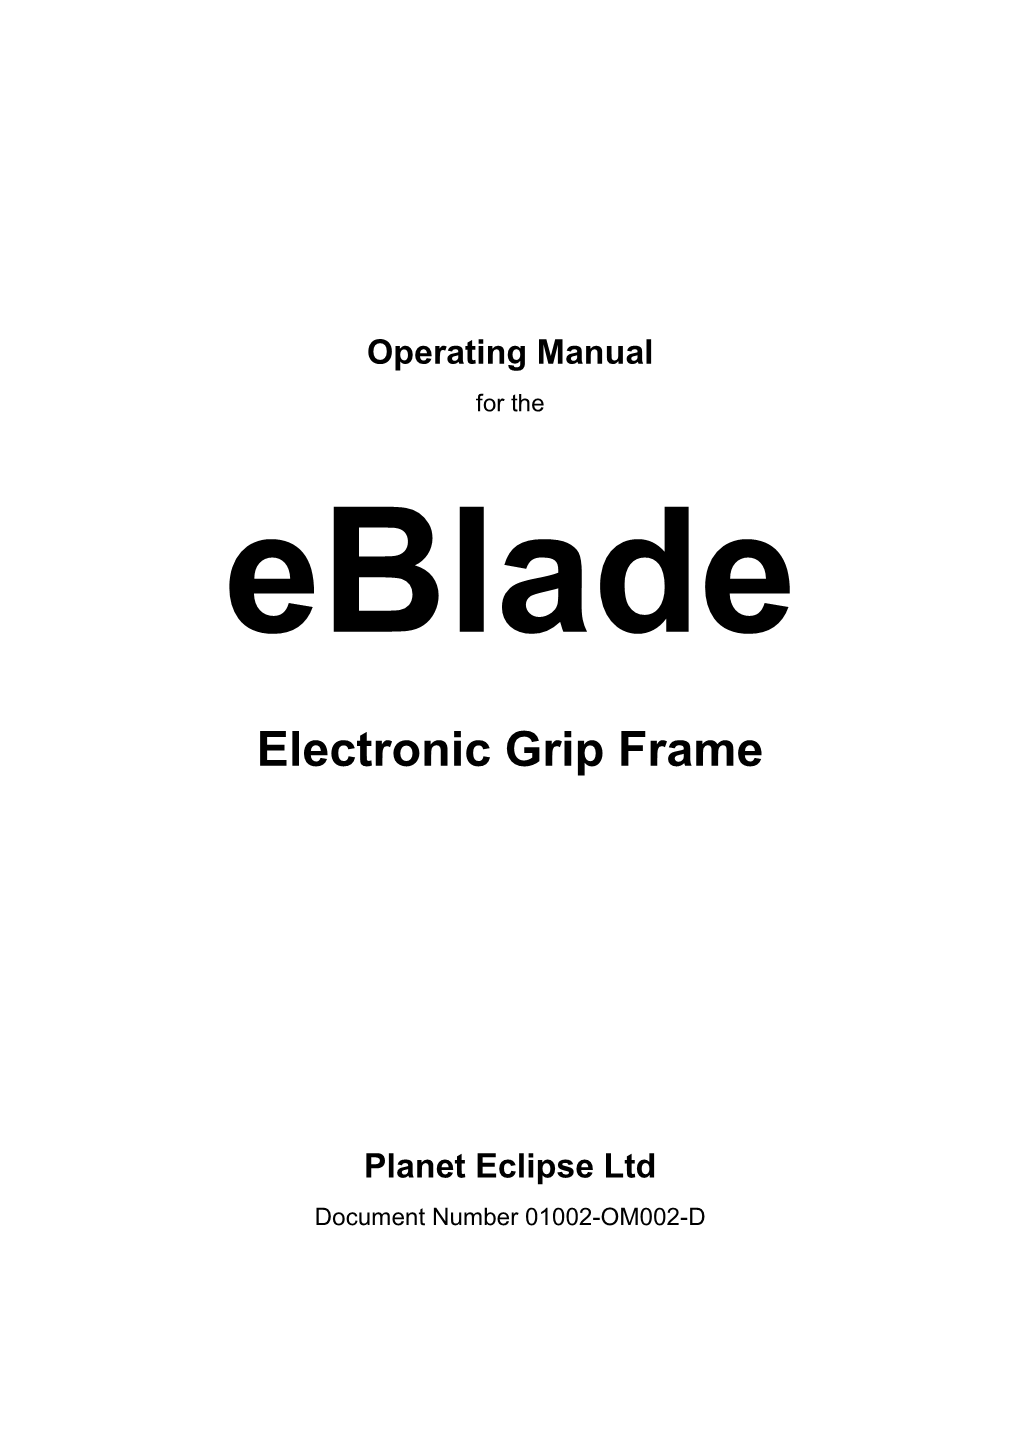 Eblade Operating Manual